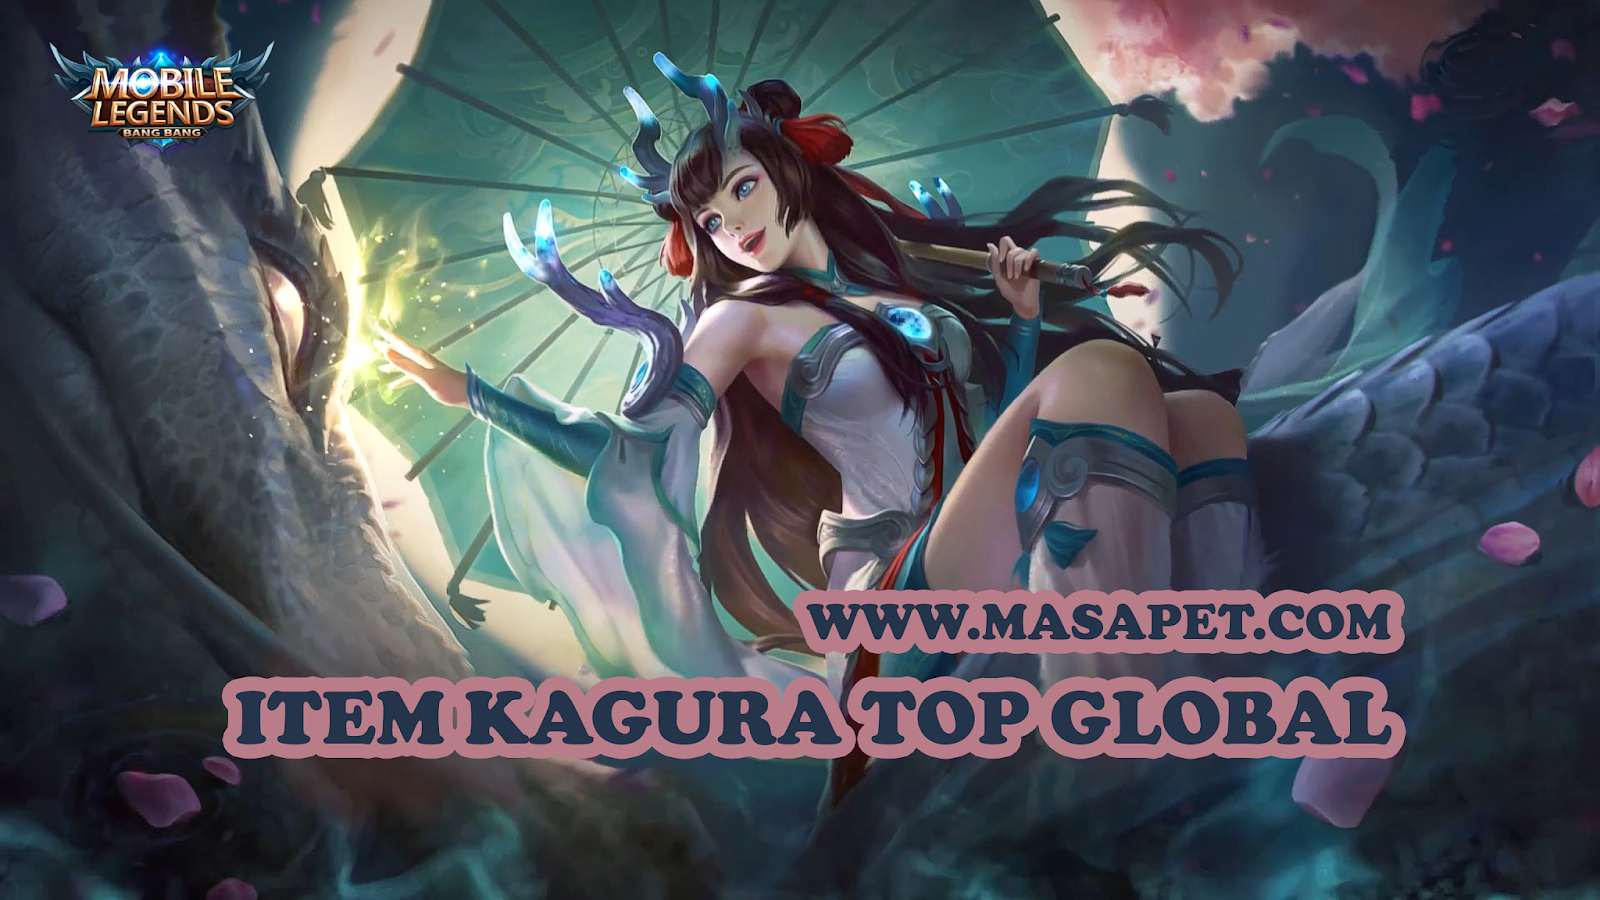 Build Gear Item Kagura Mobile Legends Top Global Mas Apet